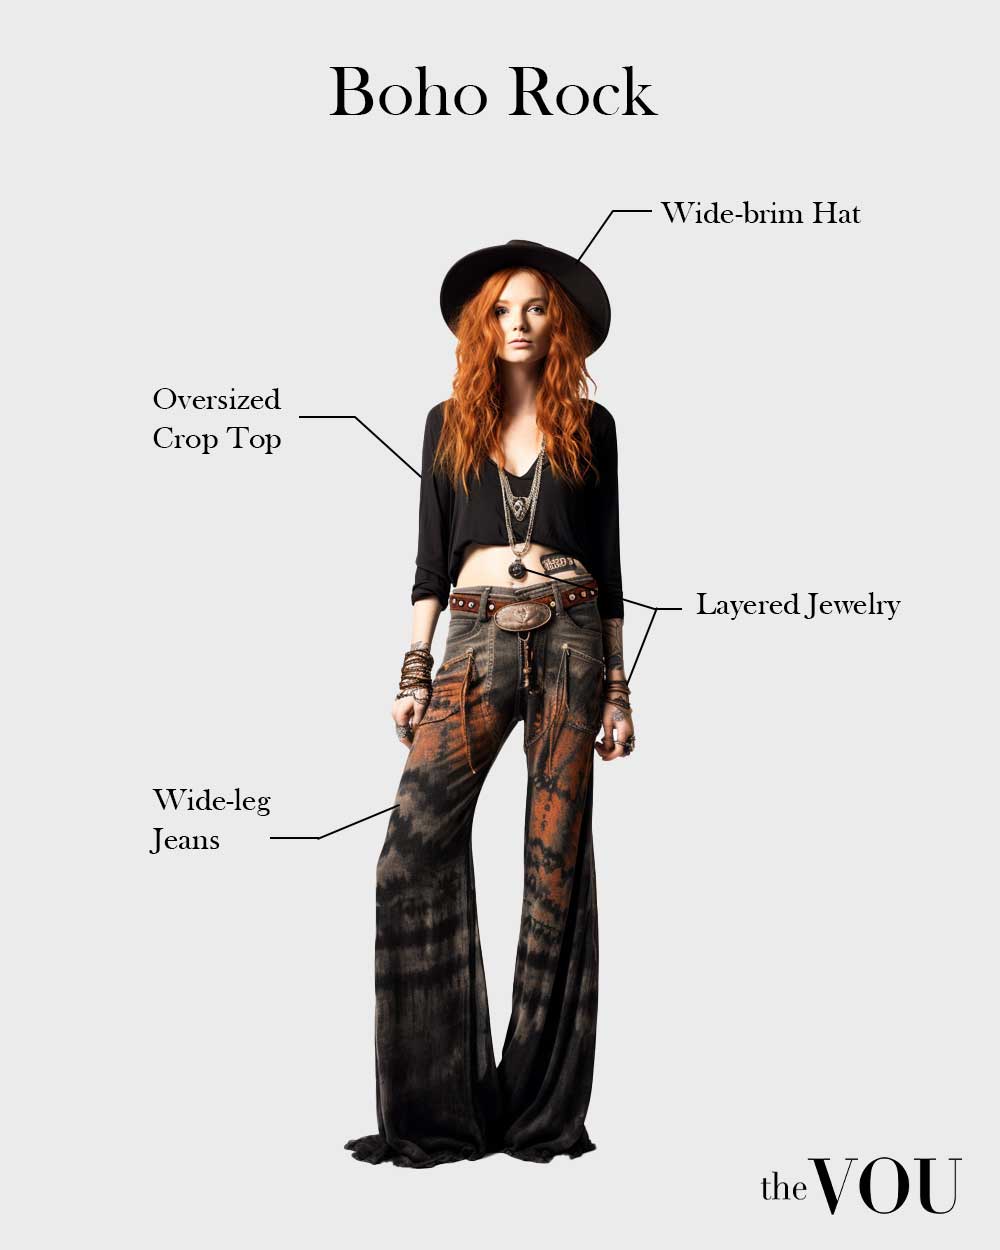 boho rock outfit: wide-brim hat, oversized crop top, wide leg jeans